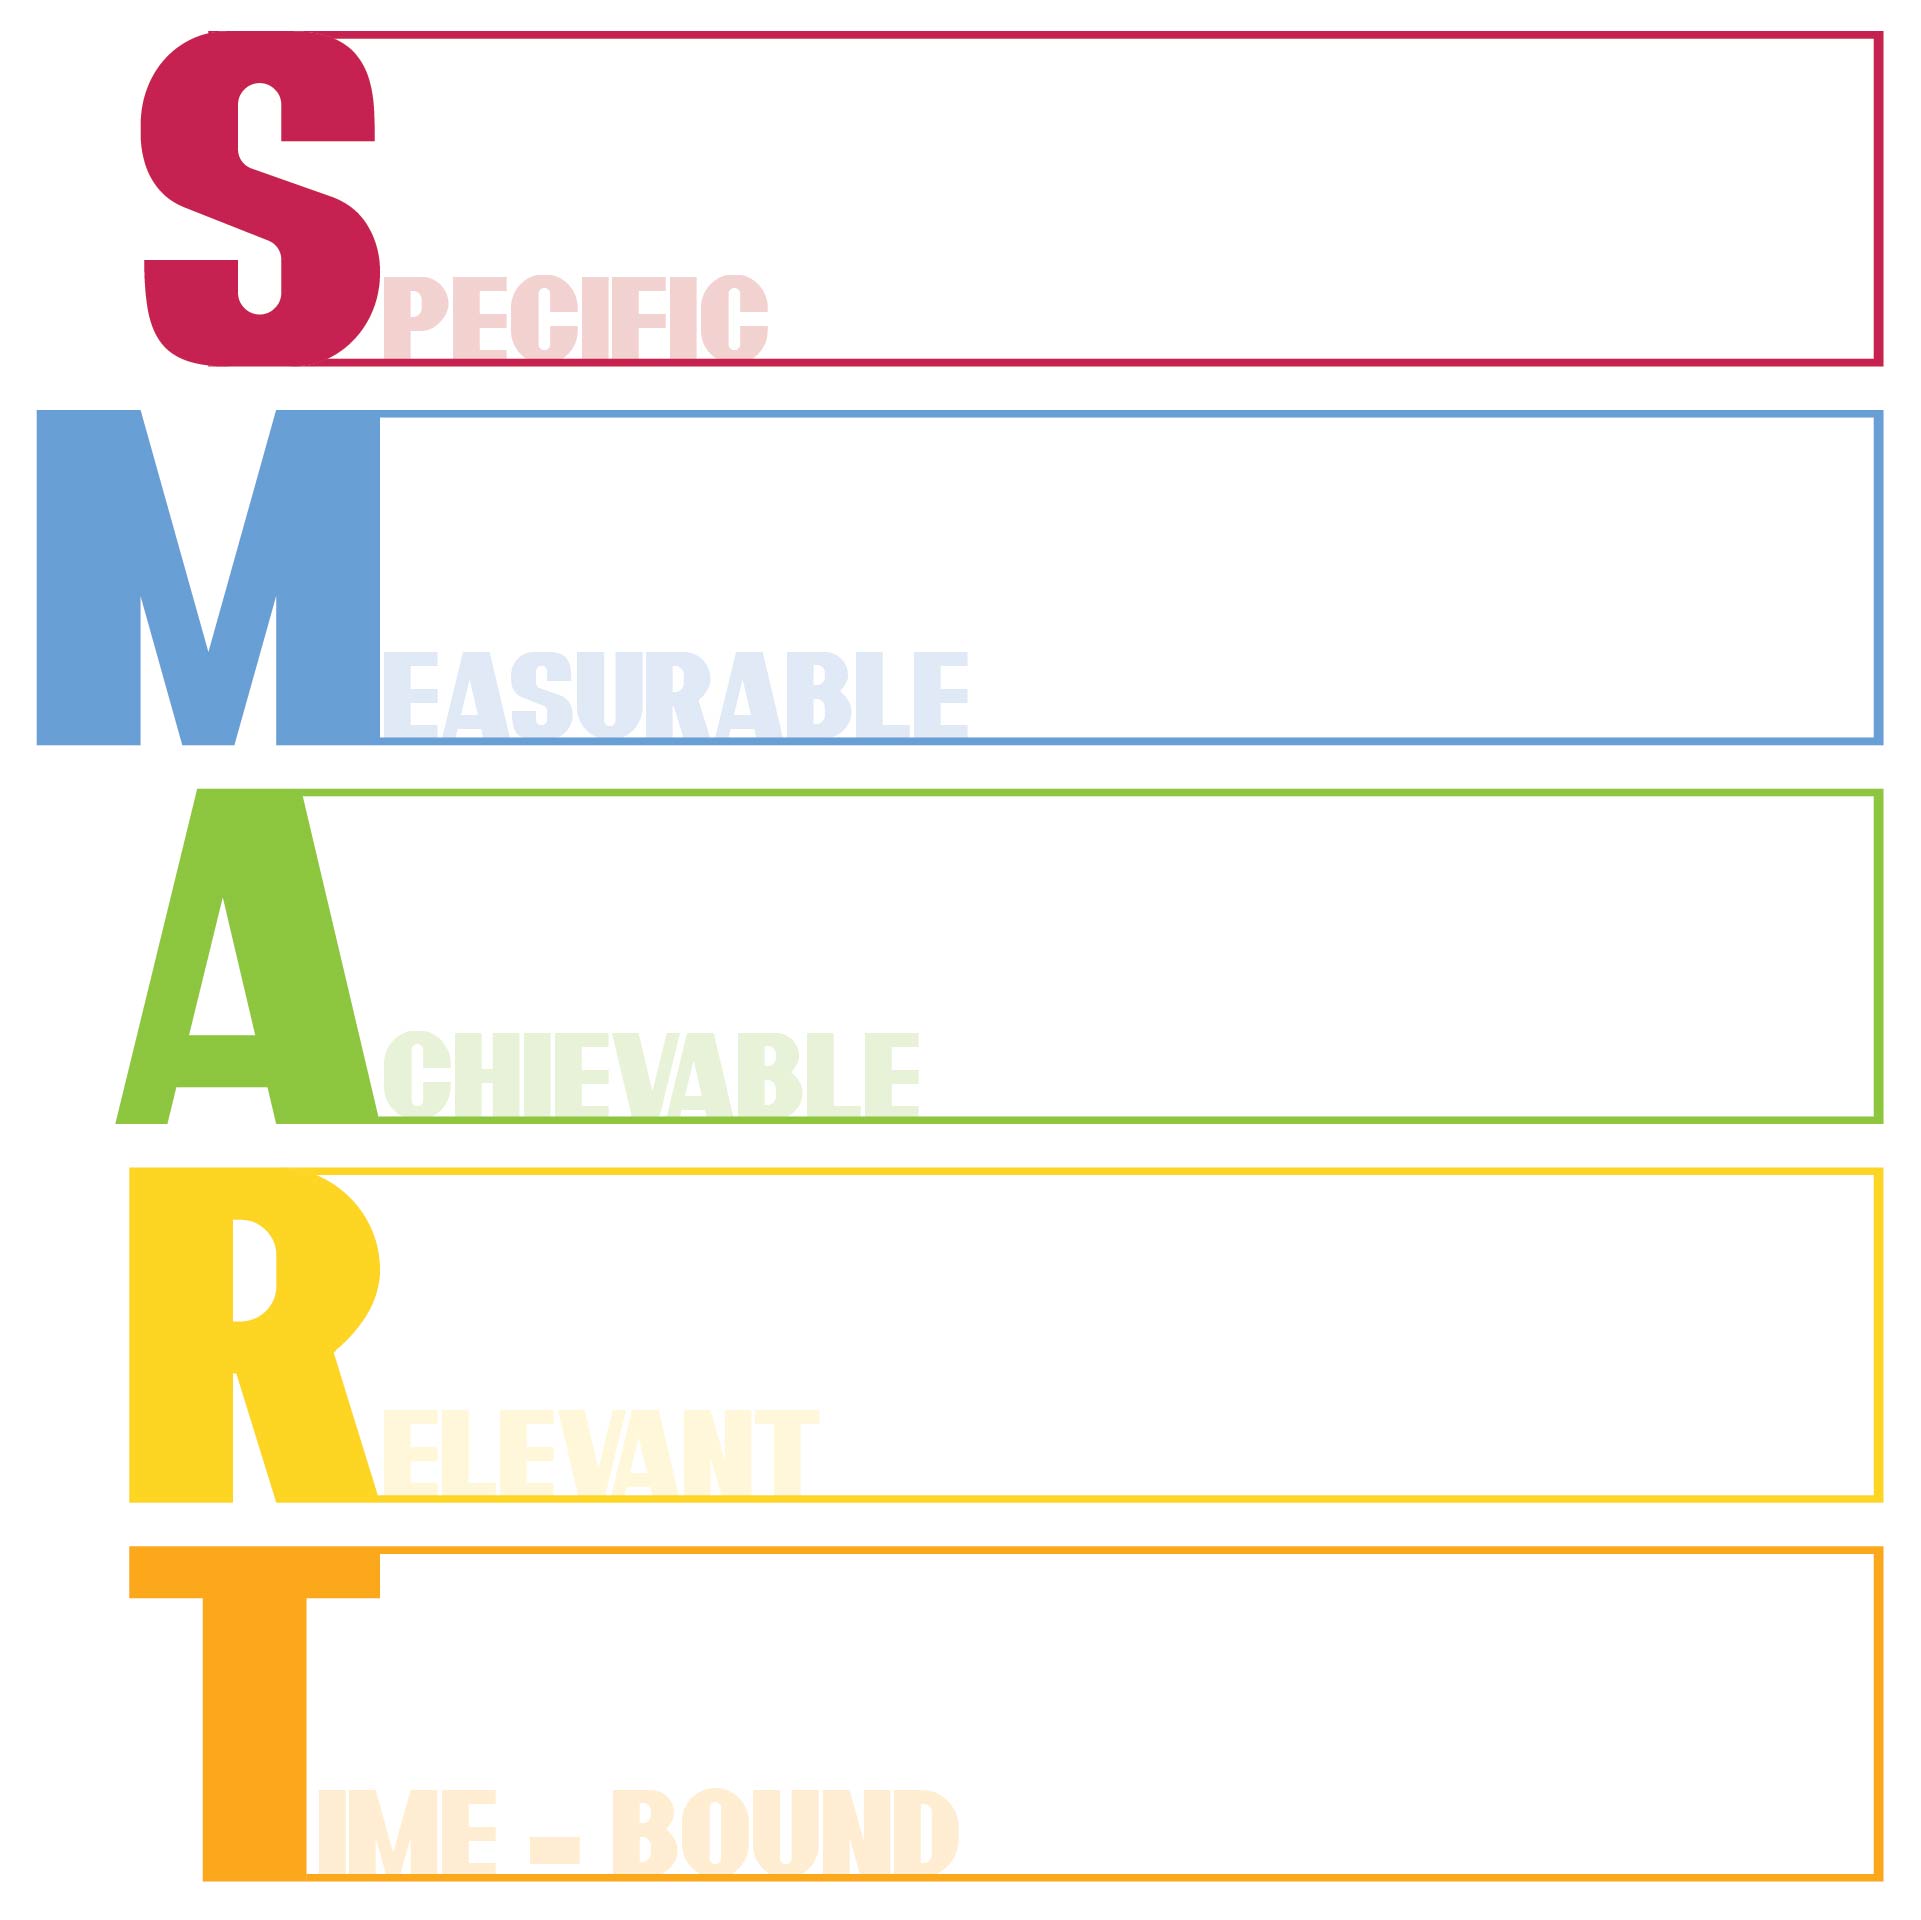 Blank Printable Goals Template Smart